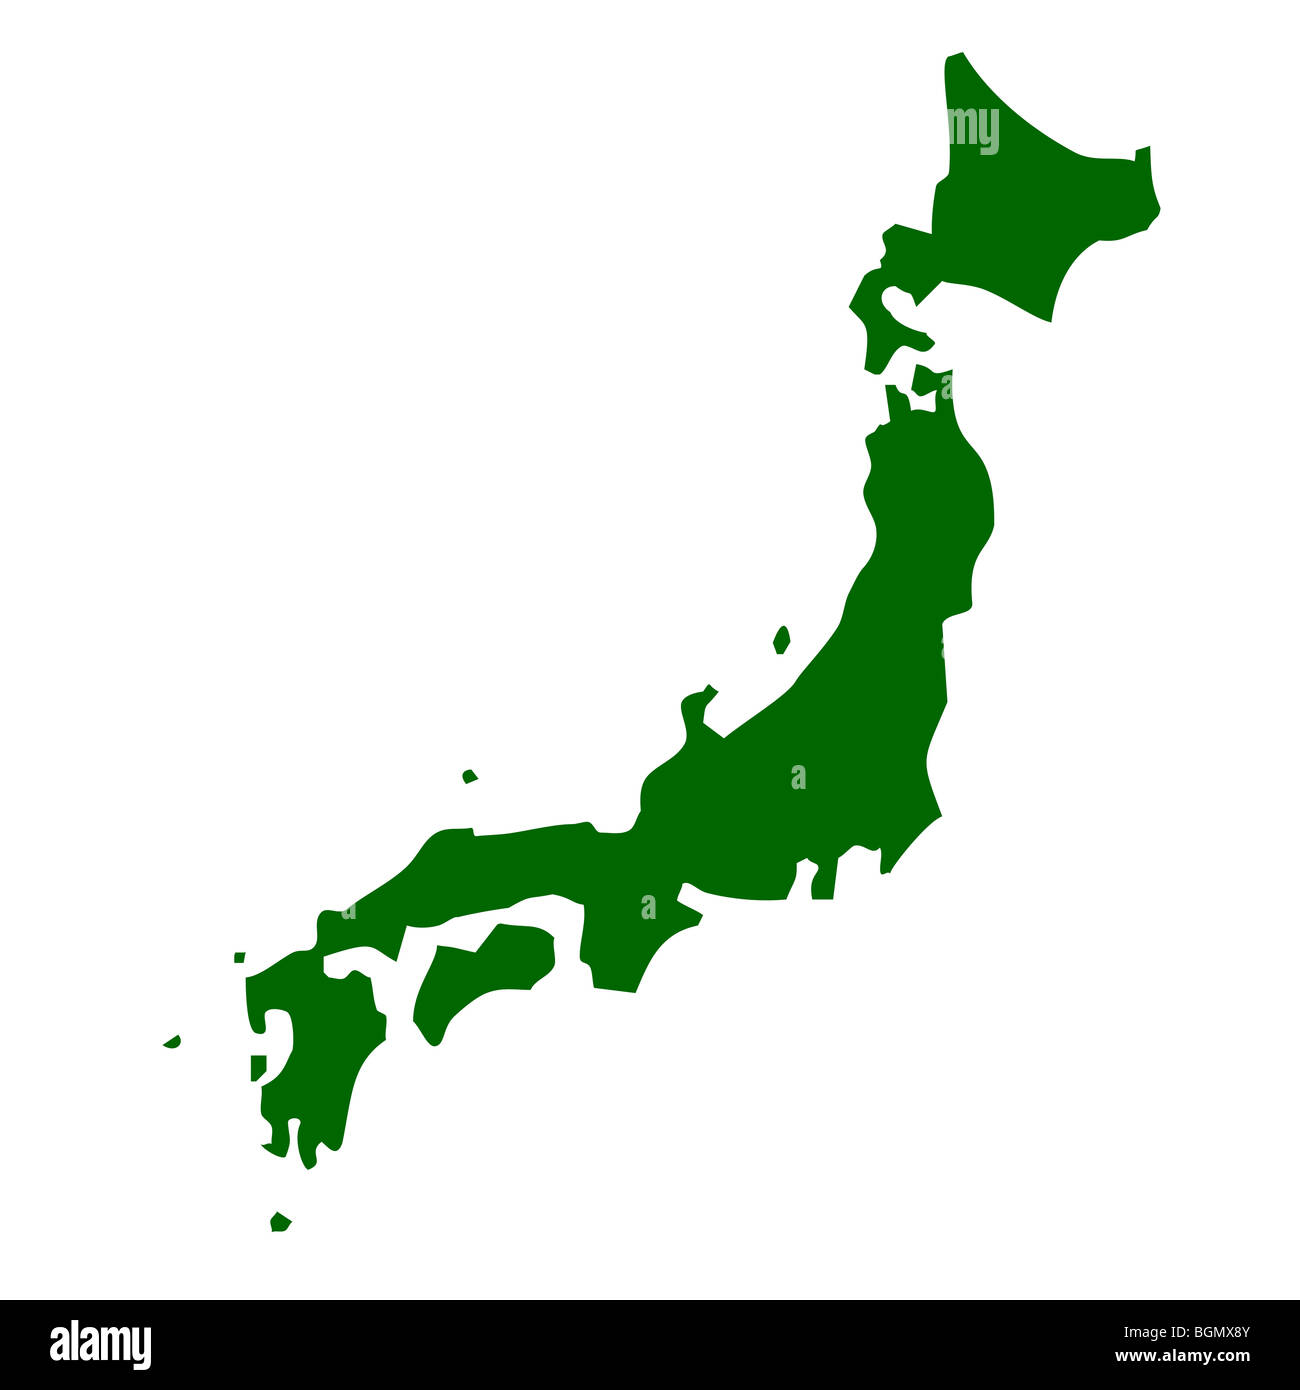 Japan map isolated on white background. Stock Photo